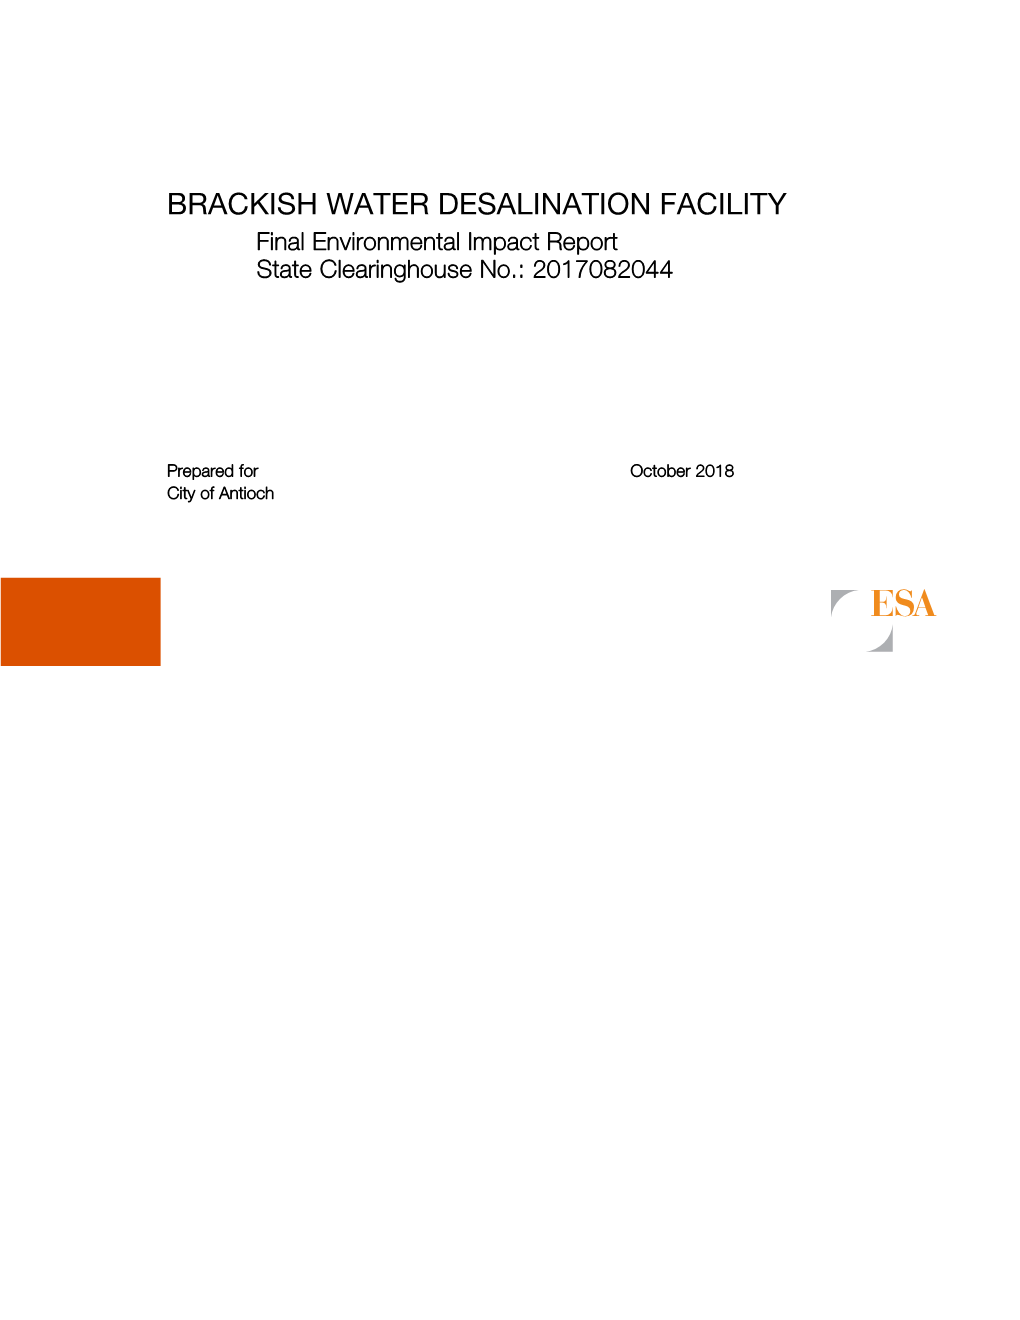 Brackish Water Desalination Project Final EIR